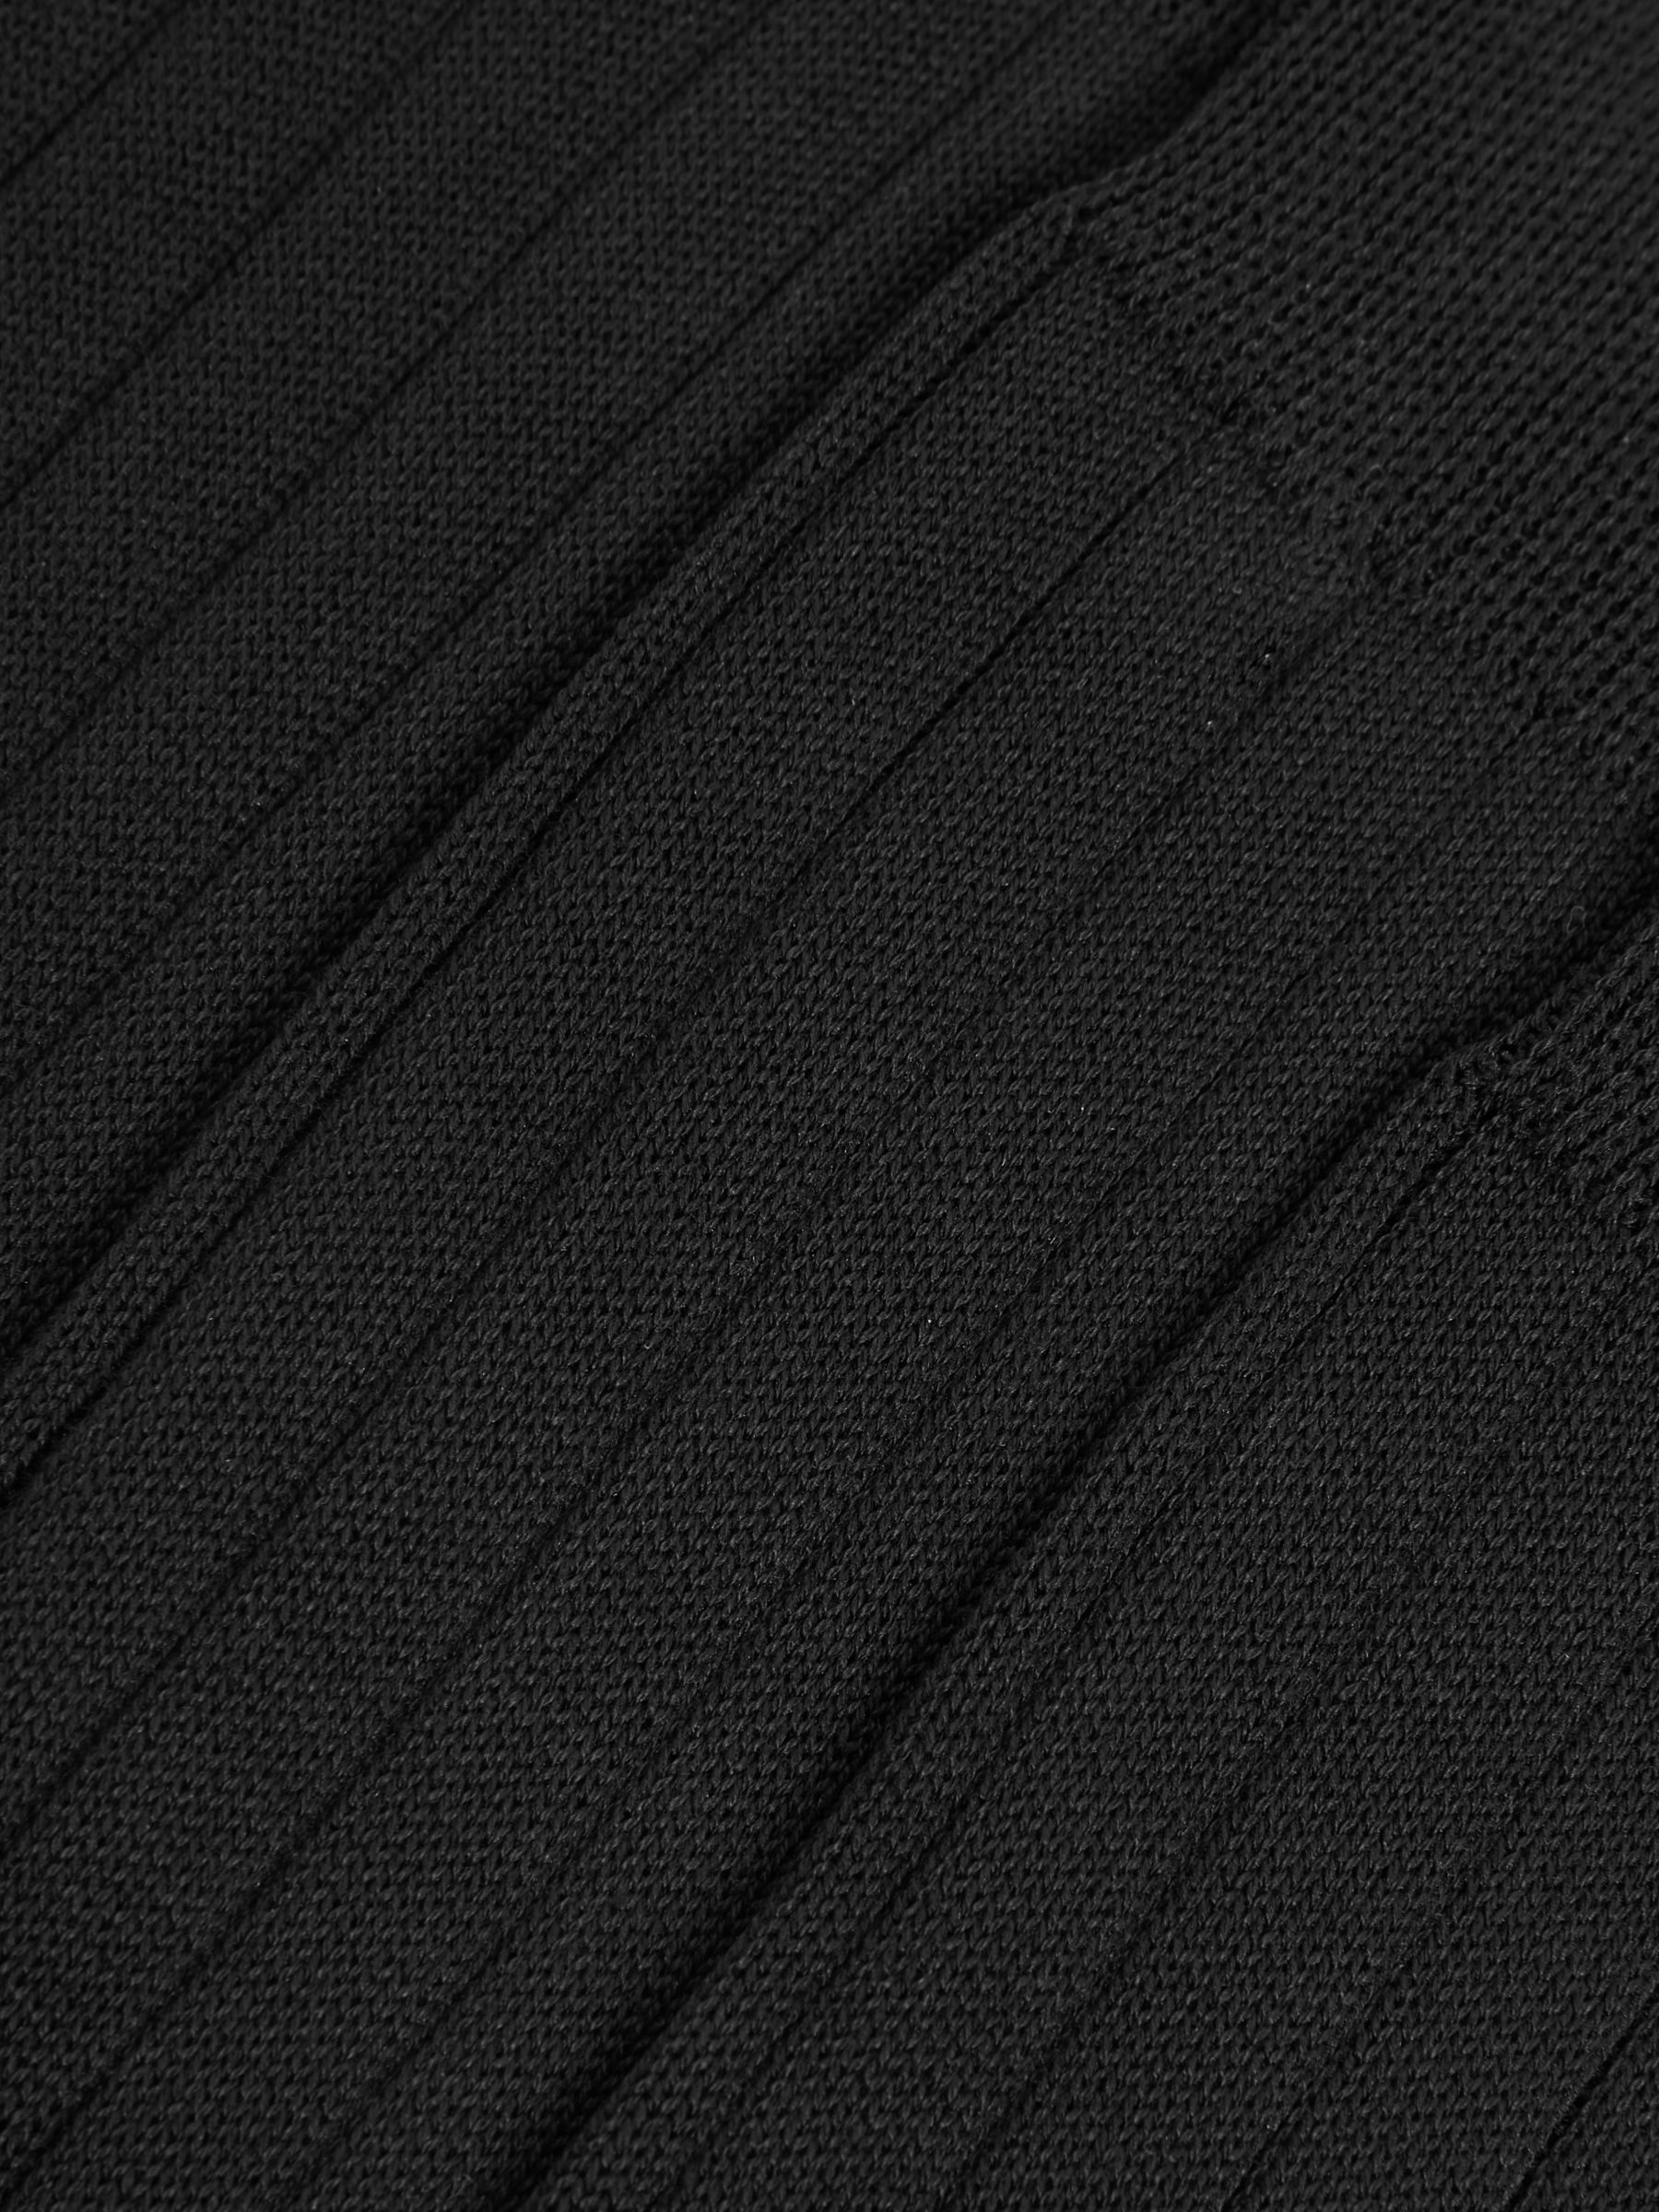 Buy John Lewis Made in Italy Mercerised Cotton Socks, Pack of 3, Black Online at johnlewis.com